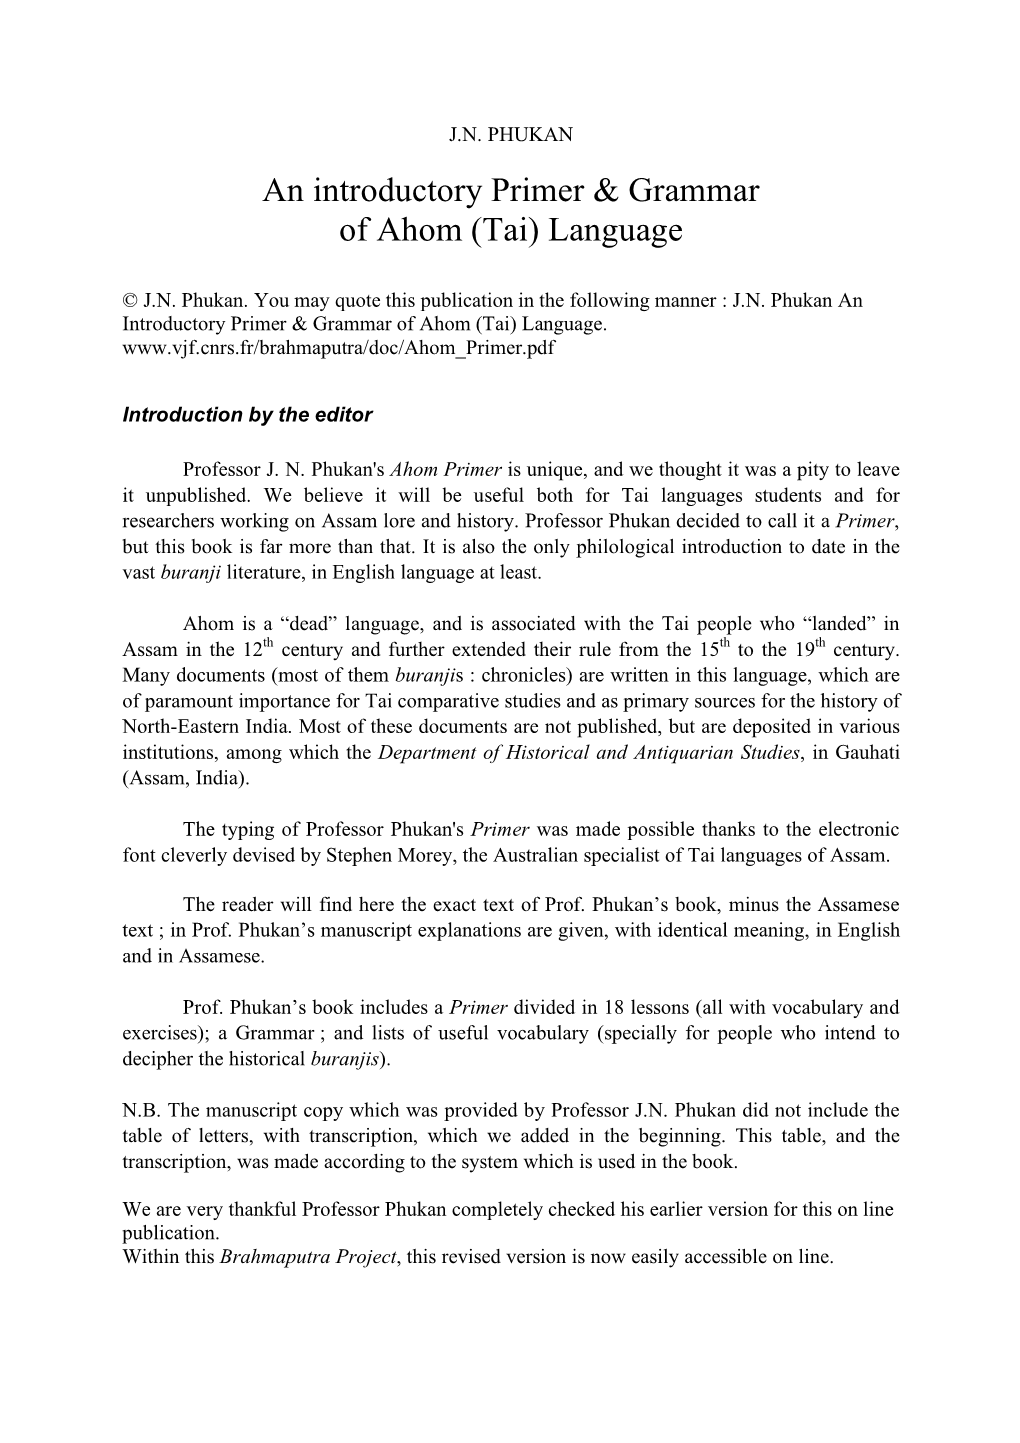 An Introductory Primer & Grammar of Ahom (Tai) Language